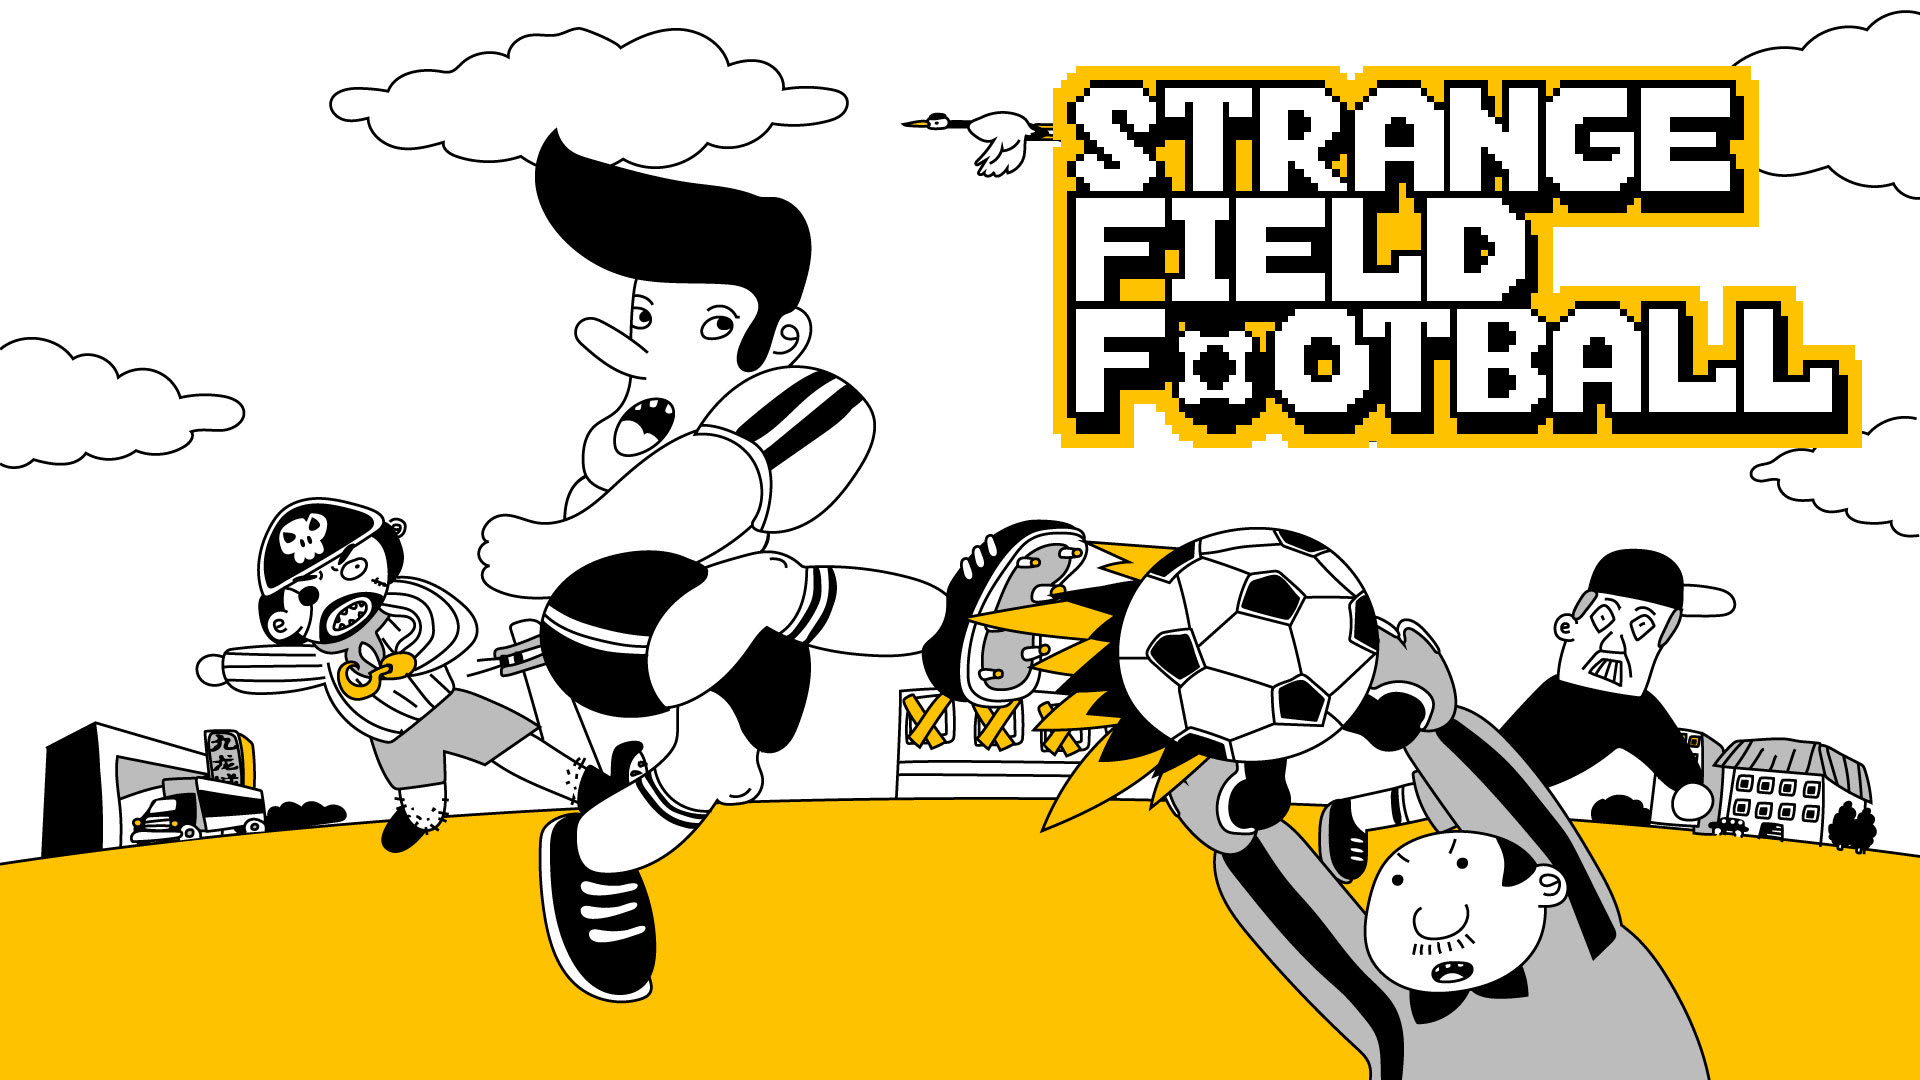 Strange Field Football